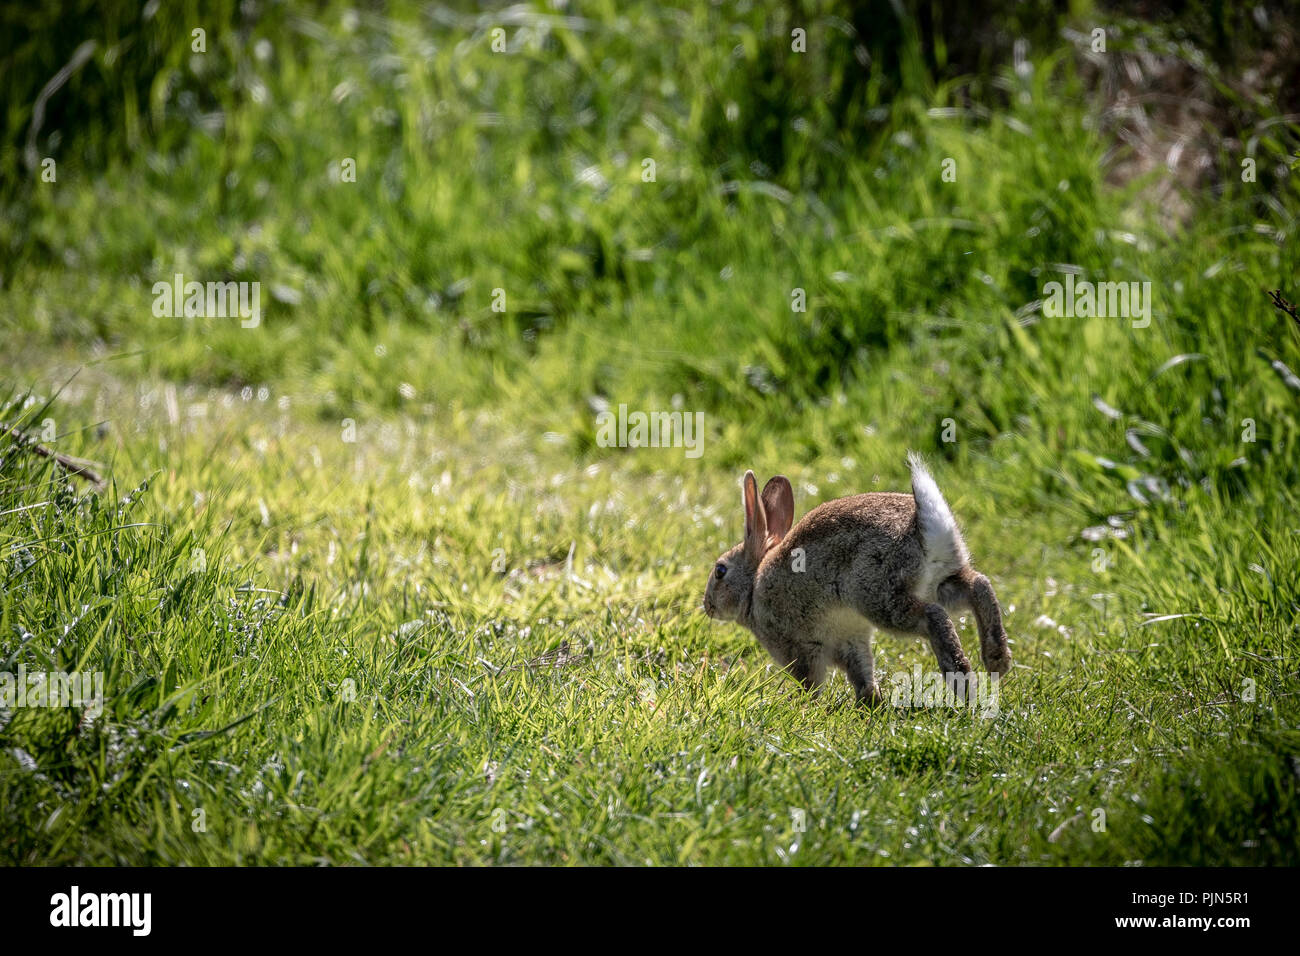 Rabbit running away across grass. Stock Photo